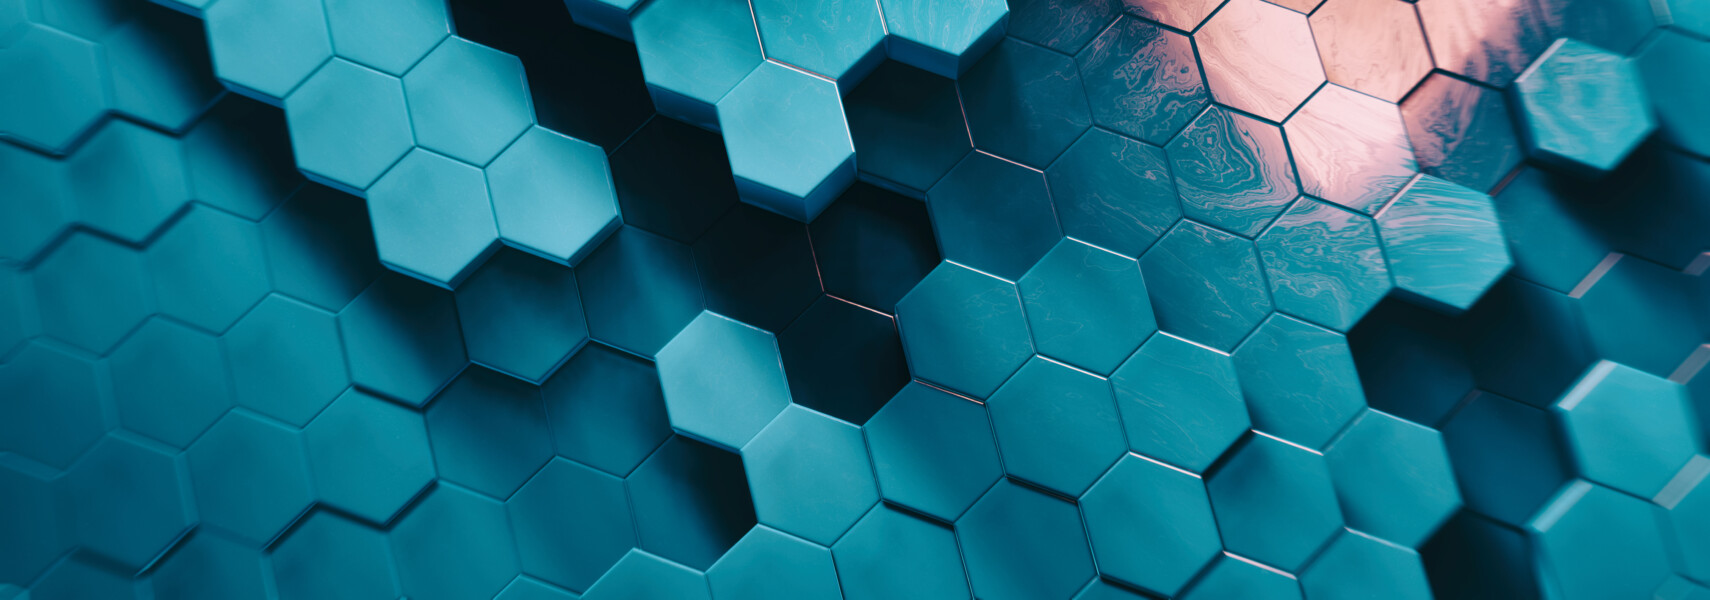 Abstract Technical 3D Hexagonal Background Pattern